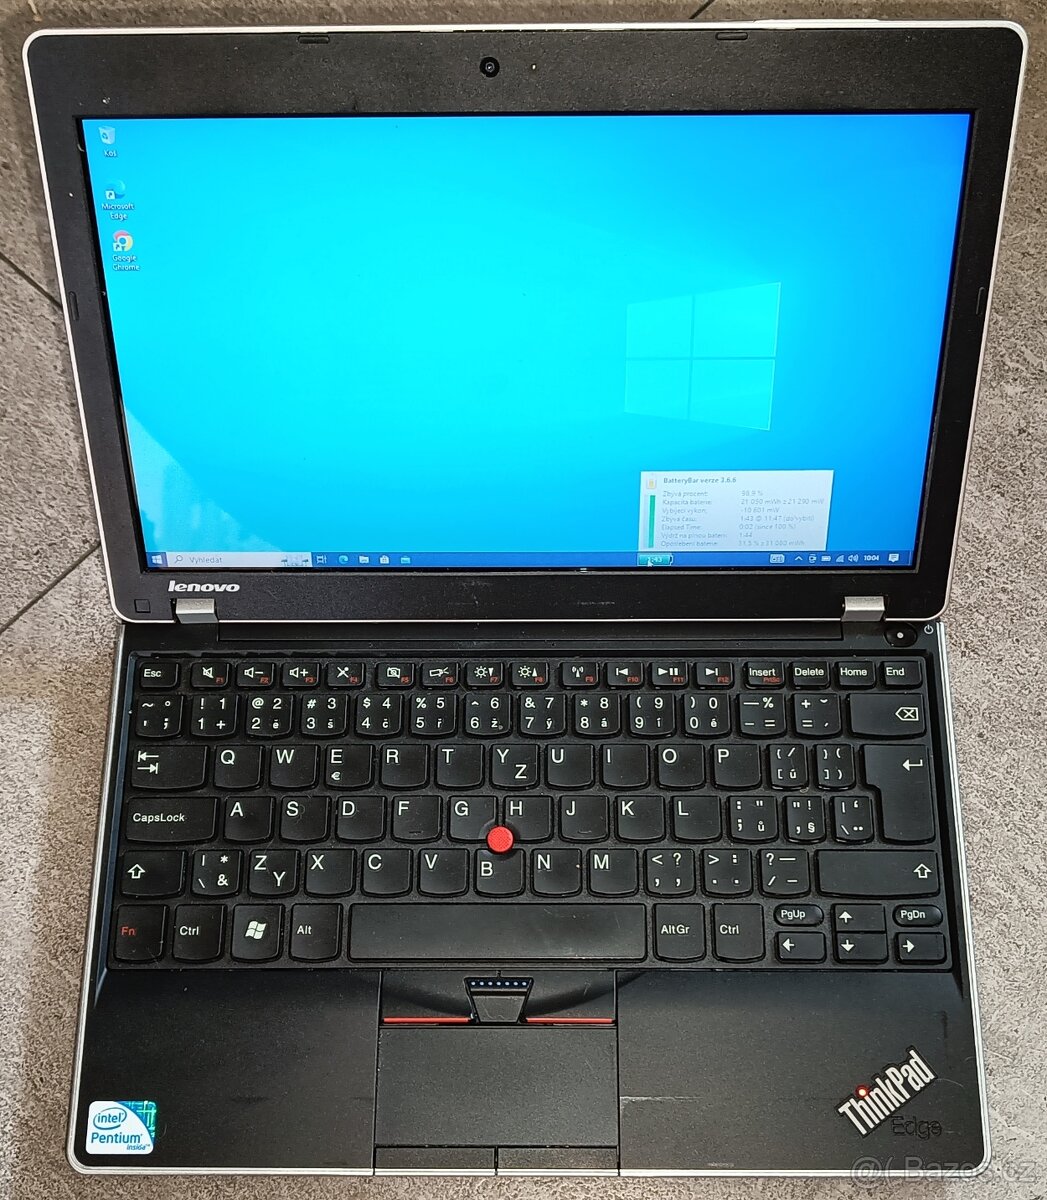 Lenovo ThinkPad Edge 0328-3HG RED,Win 10,HDD 320GB,RAM 4GB,1